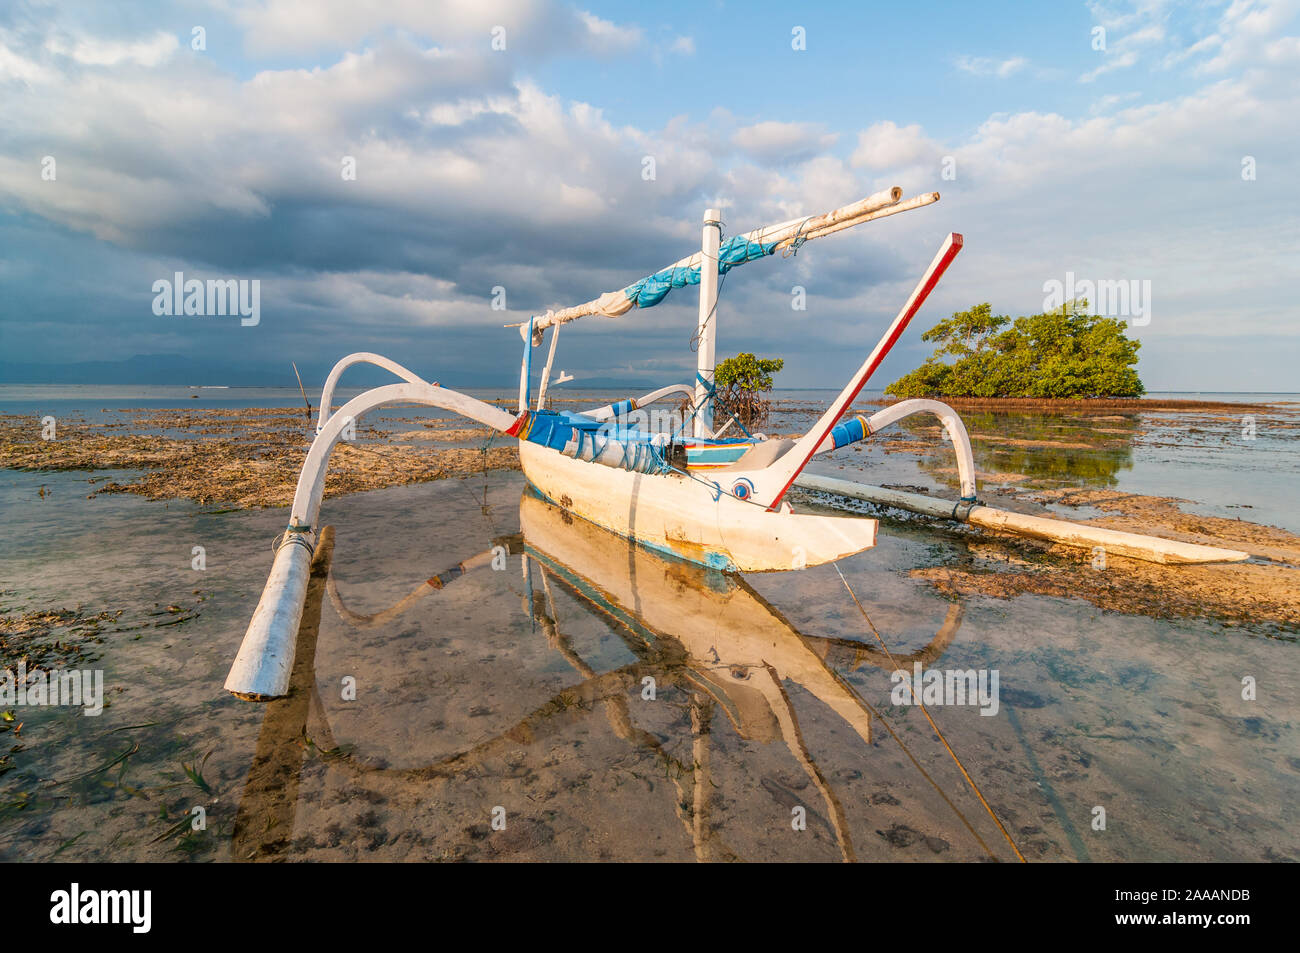 Tipica imbarcazione indonesiana, jukung, nei pressi di una mangrovia, spiaggia, Nusa Lembongan, Bali, Indonesia Foto Stock